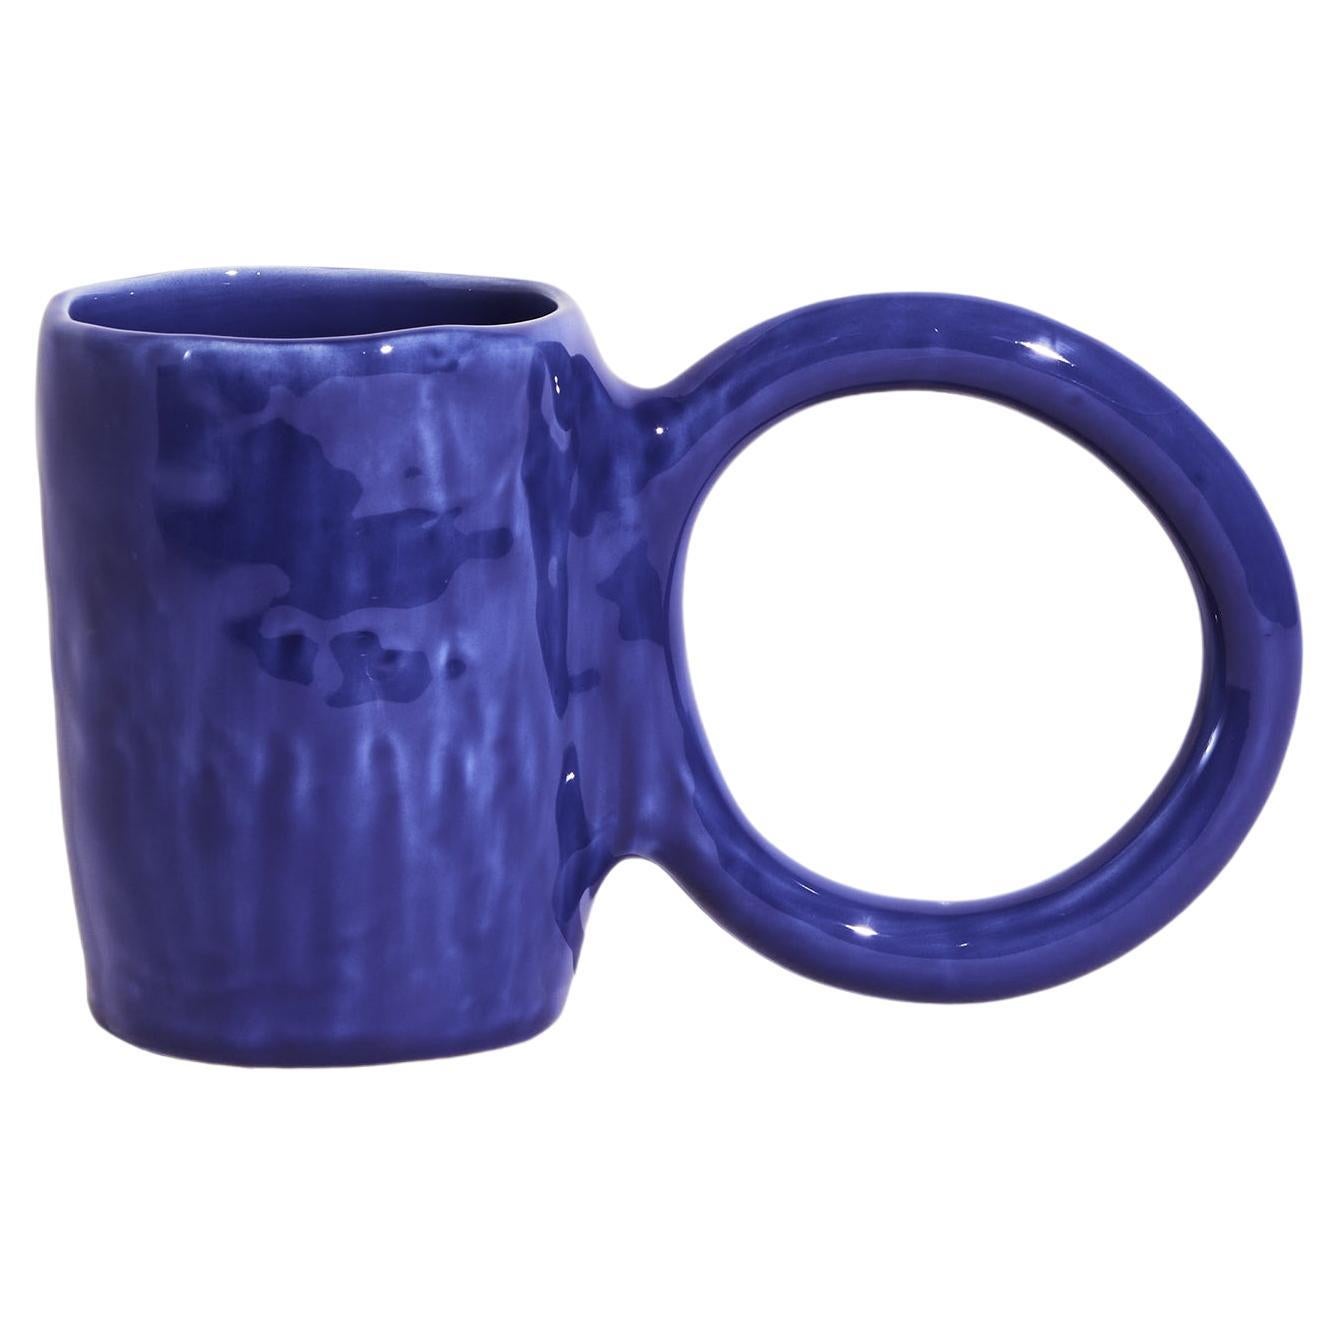 PETITE FRITURE Donut, Large Mug, Blue, Designed by Pia Chevalier